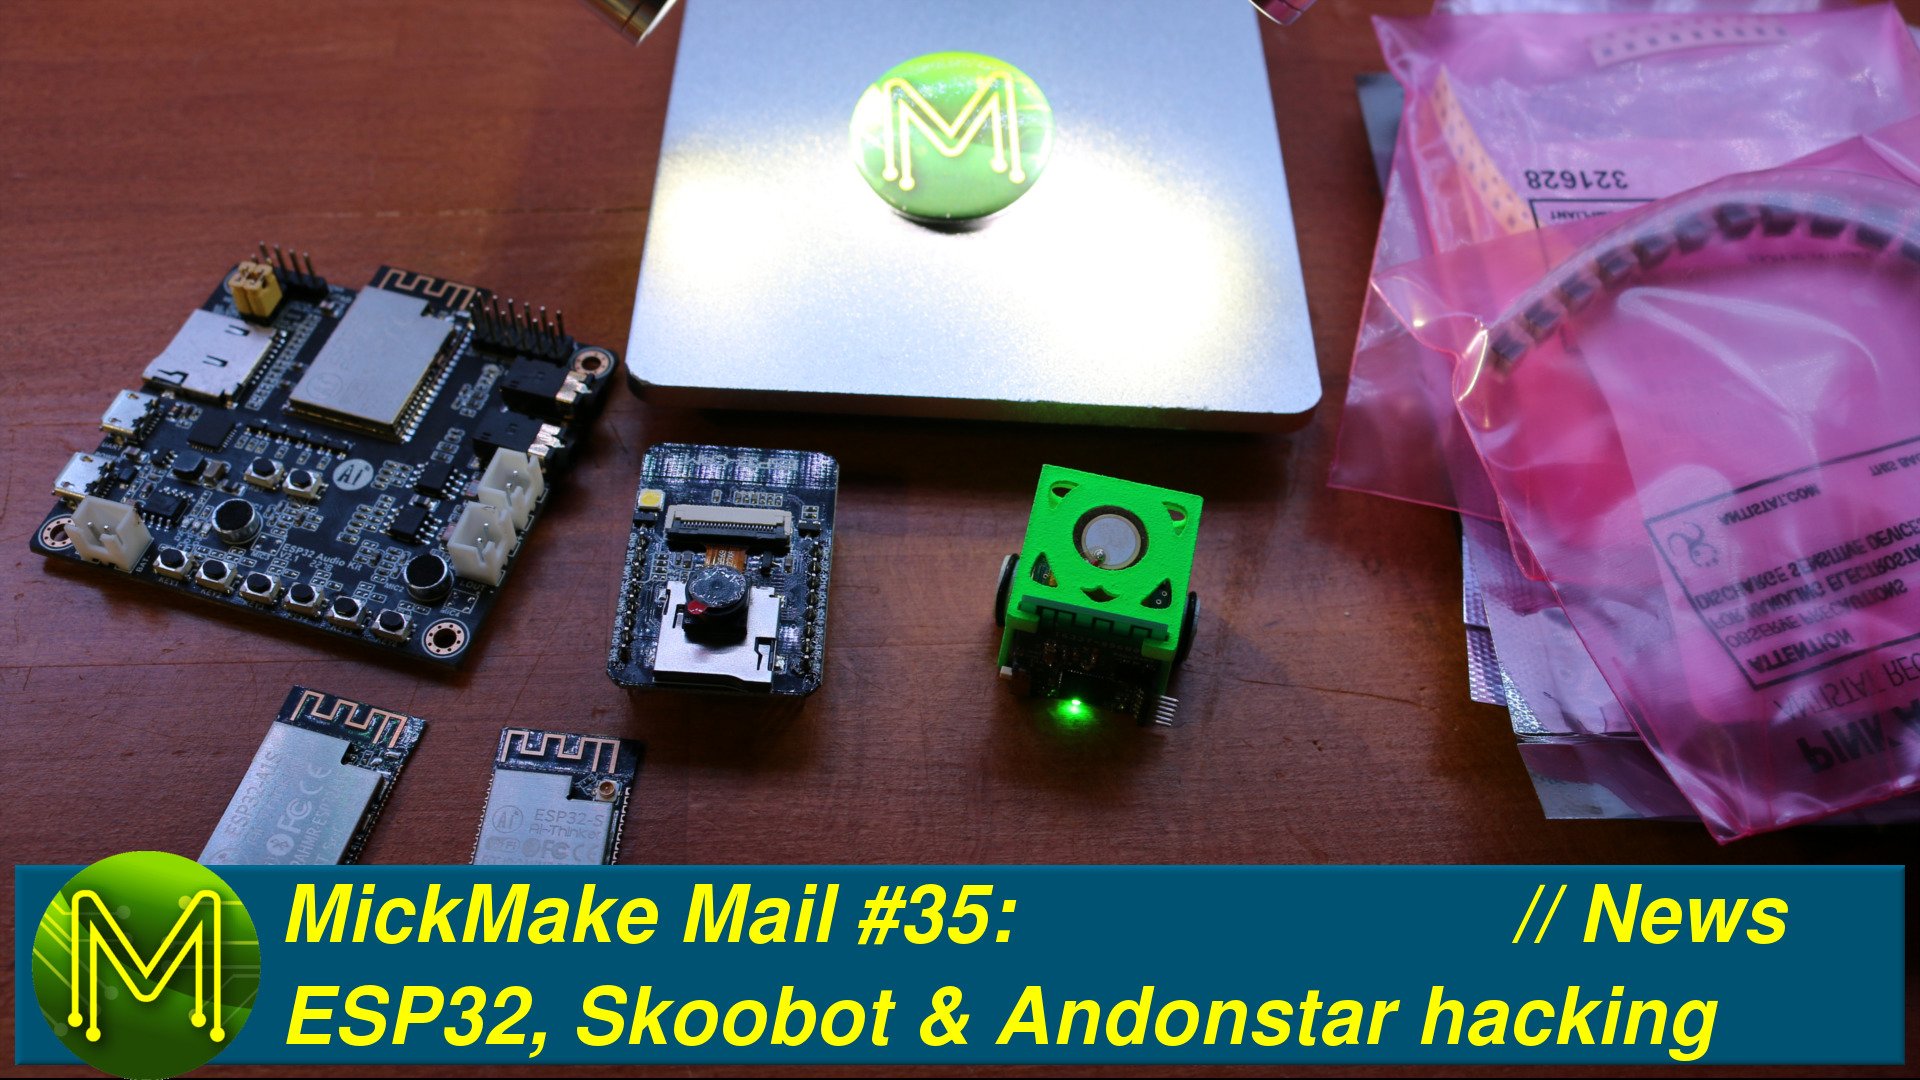 MickMake Mail #35: ESP32, Skoobot & Andonstar hacking. - News